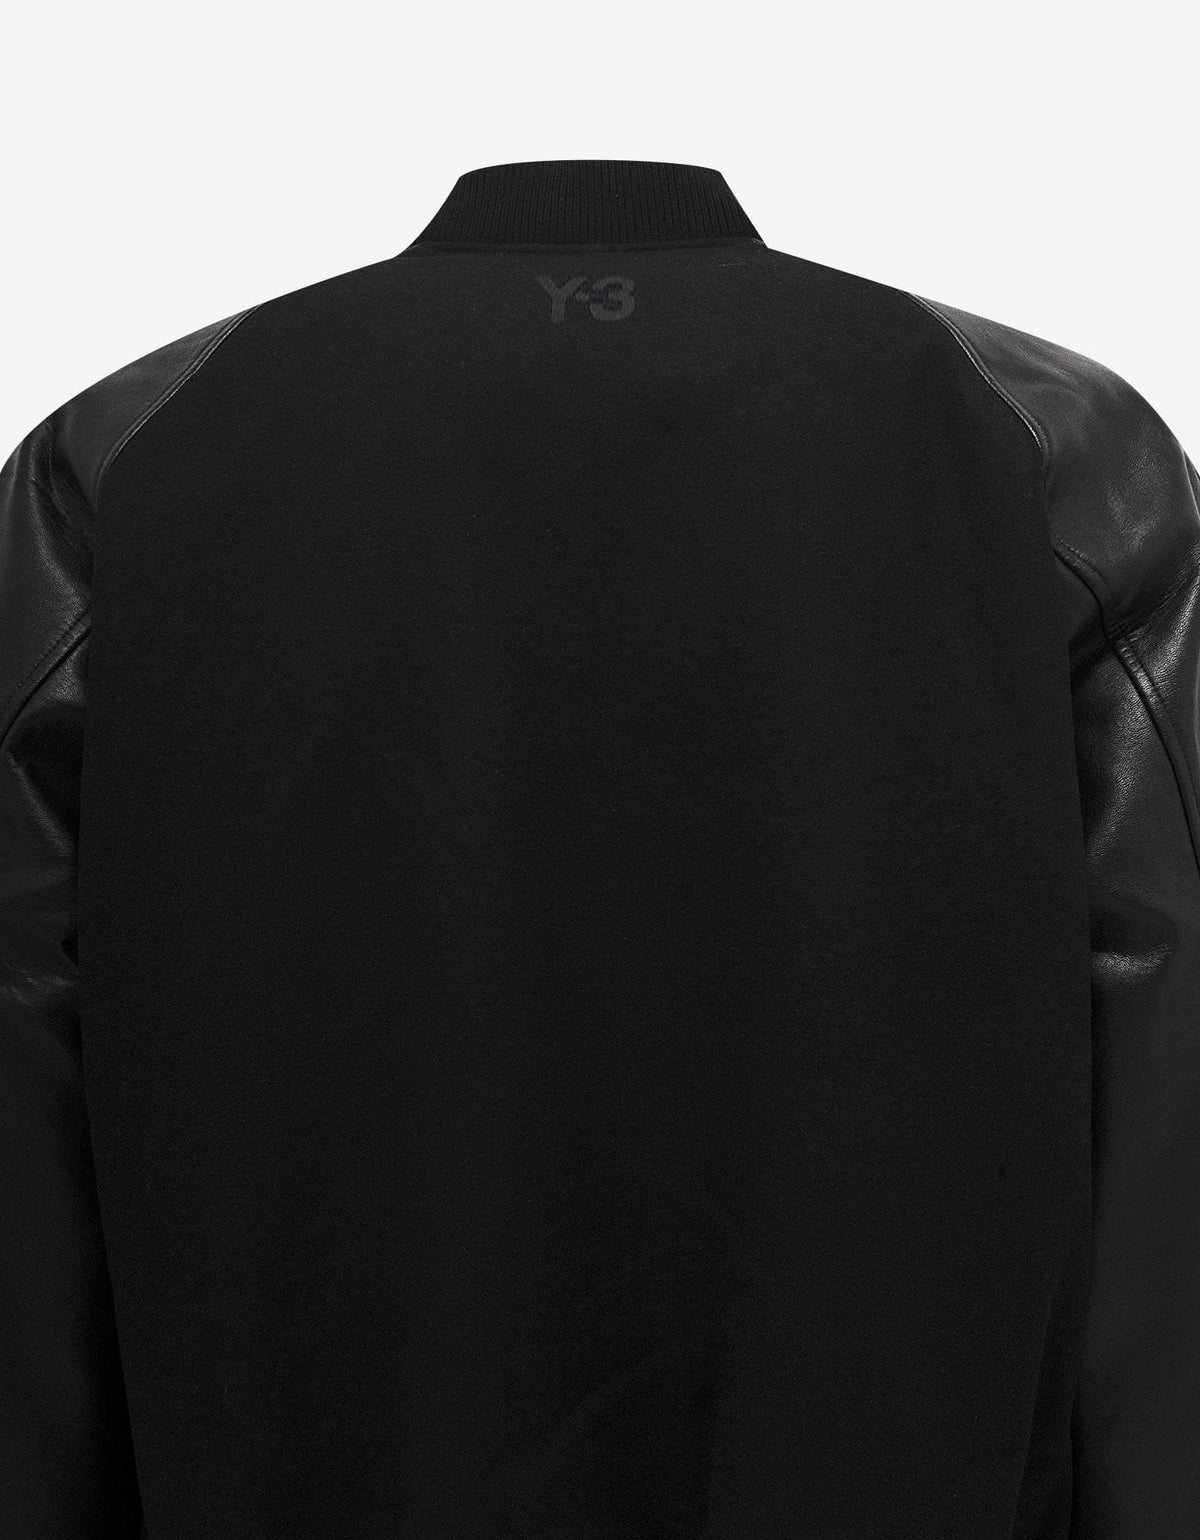 Y-3 Black Classic Varsity Jacket